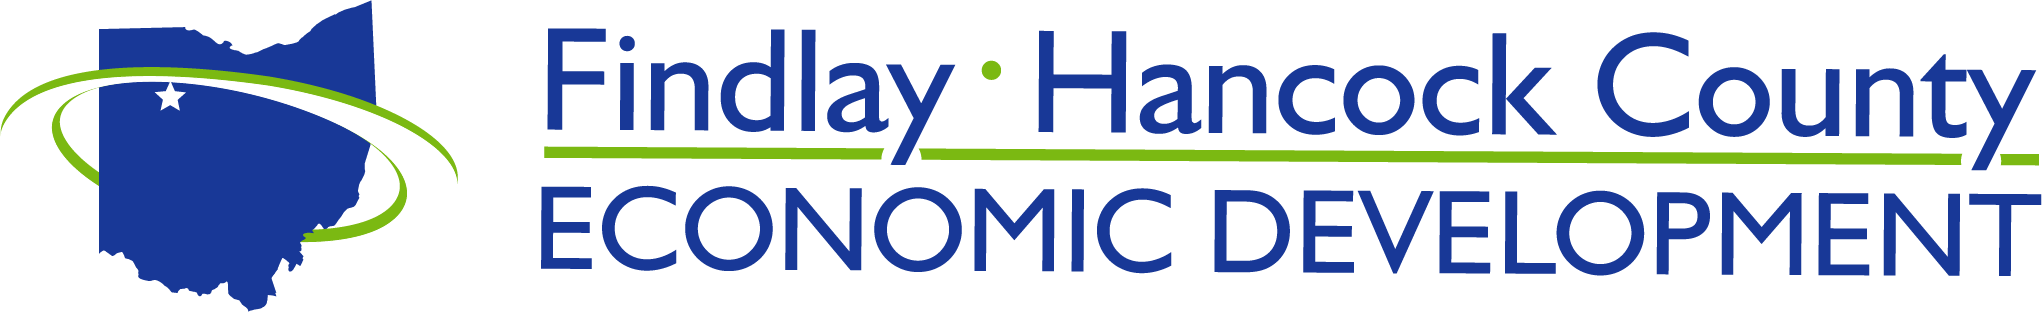 Full Color Findlay Hancock County Economic Development Logo